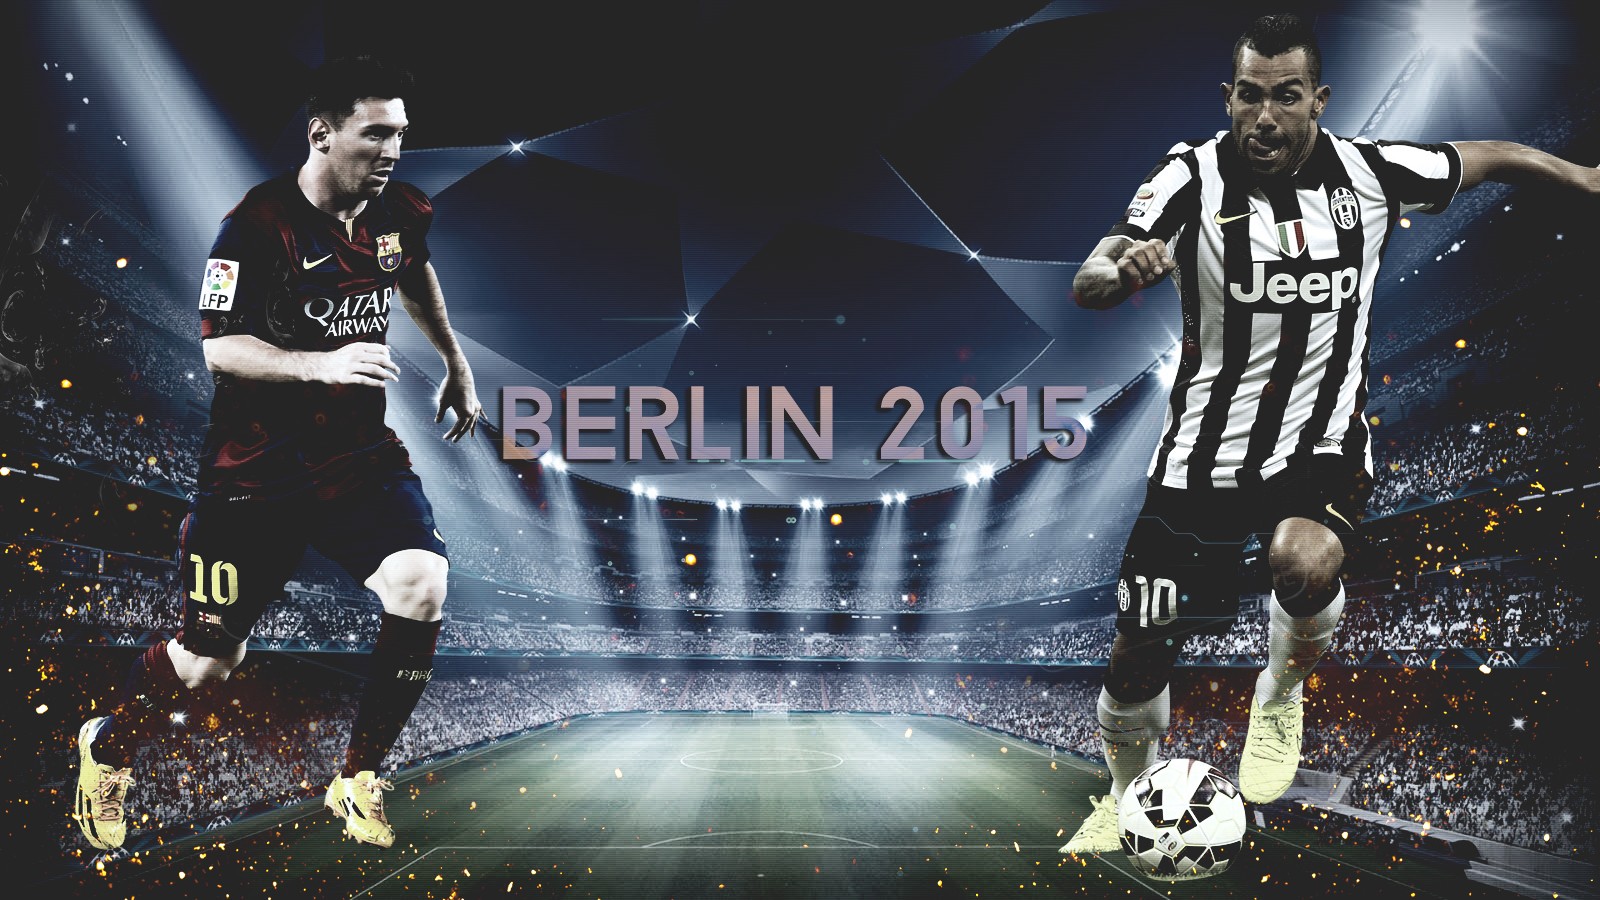 General 1600x900 footballers Champions League Carlos Tevez Berlin stadium Juventus 2015 (Year) sport men soccer